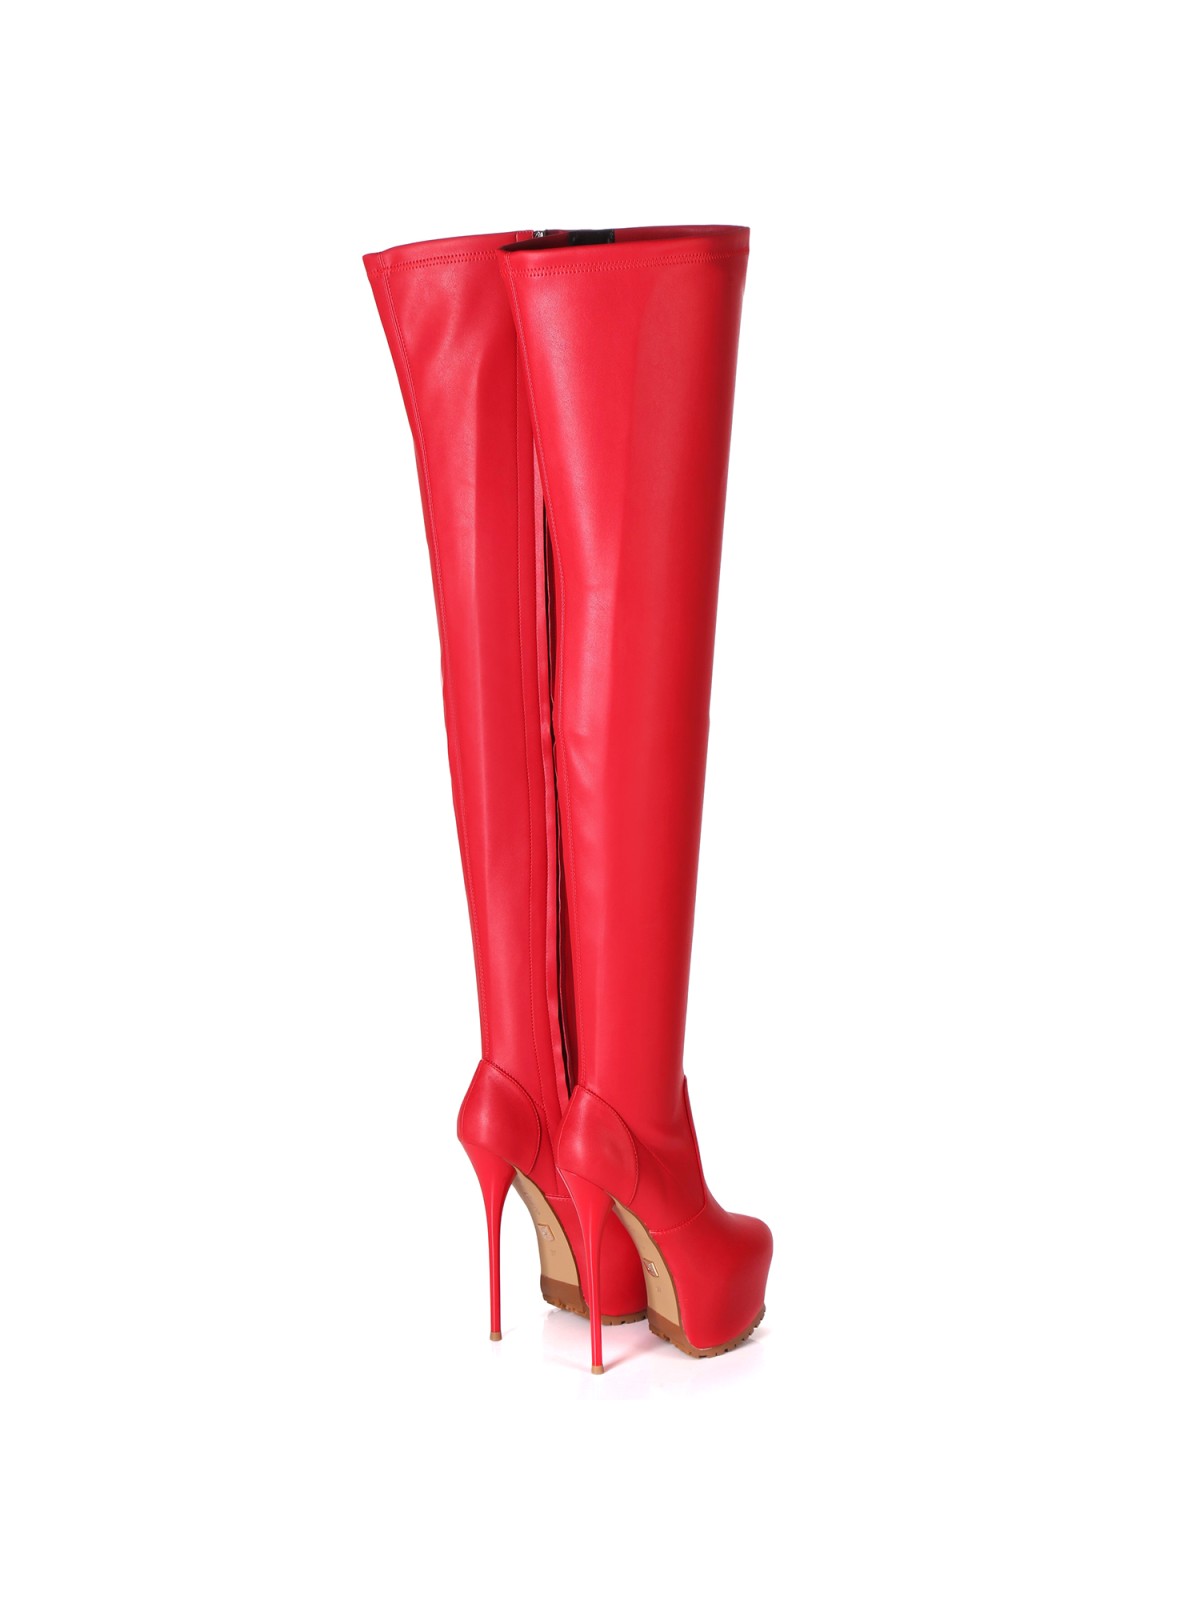 Giaro VIDA over the knee high heel boots in red